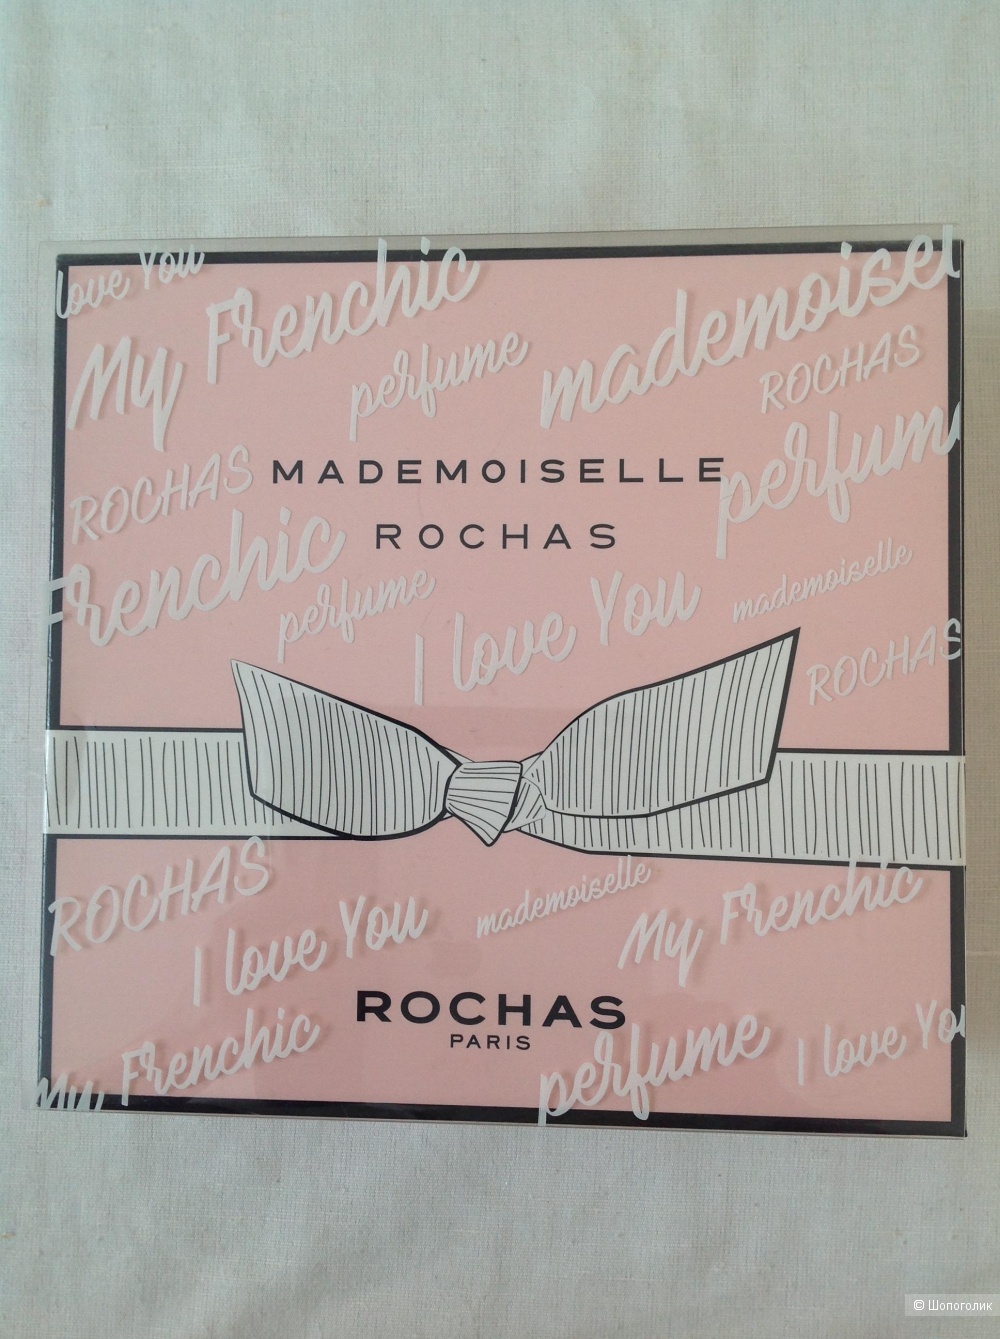 Парфюмерный набор ROCHAS, Mademoiselle Rochas, 50 мл/50 мл/ 50 мл